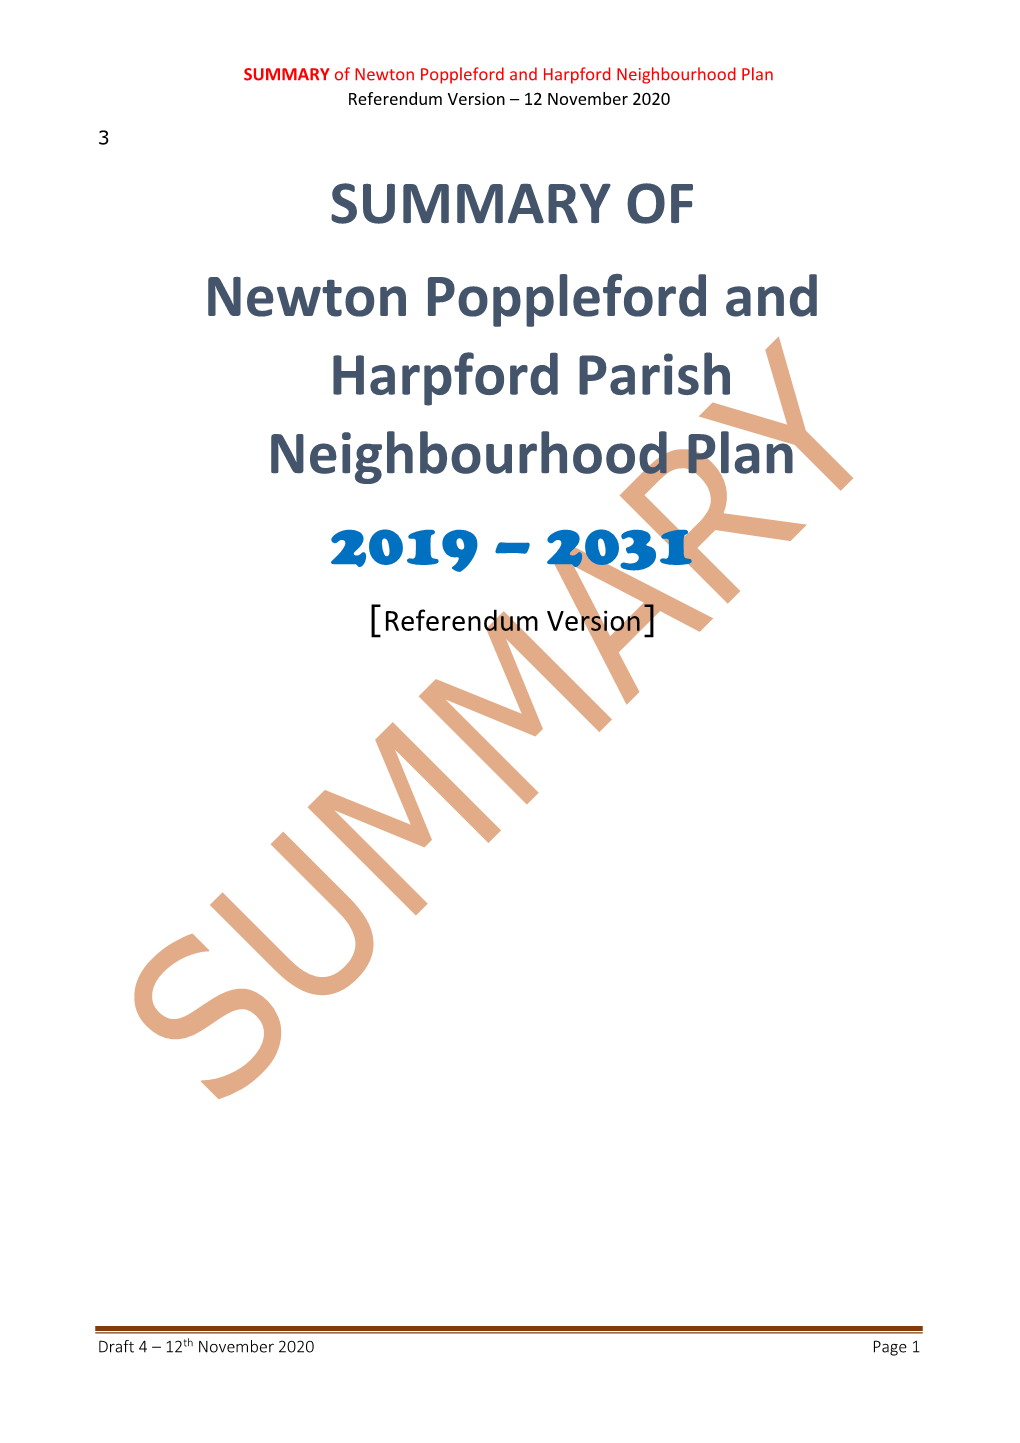 SUMMARY of Newton Poppleford and Harpford Parish Neighbourhood Plan 2019 – 2031 [Referendum Version]